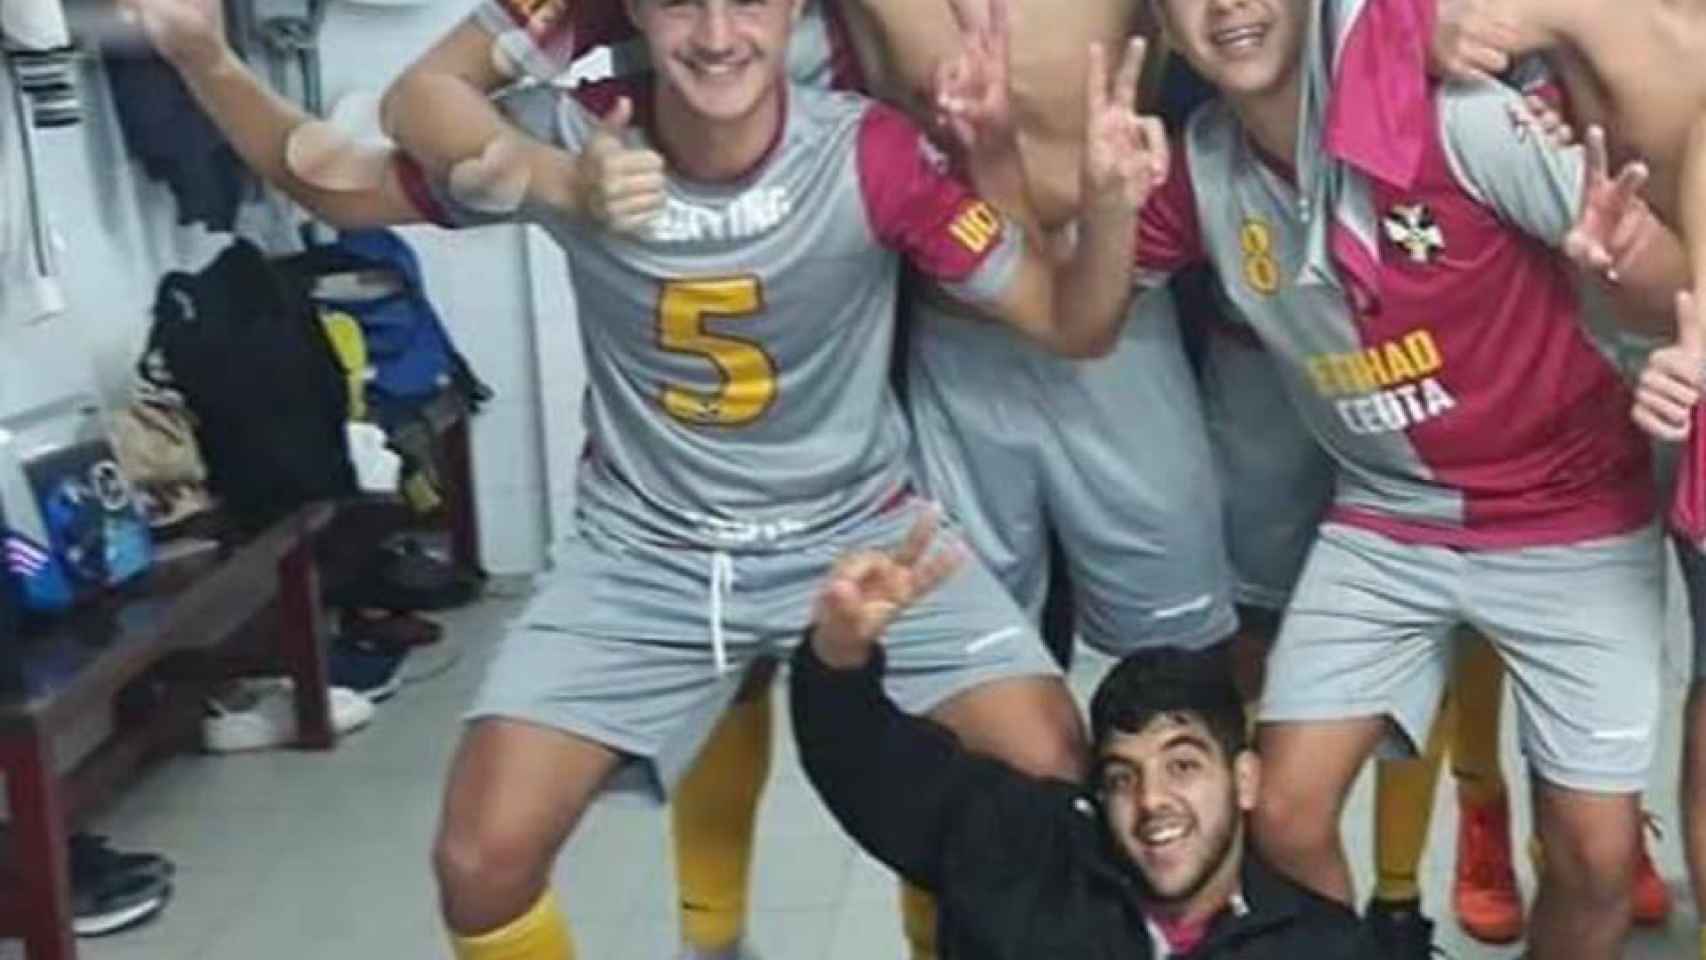 El juvenil del Sporting de Ceuta fallecido, el dorsal número 5